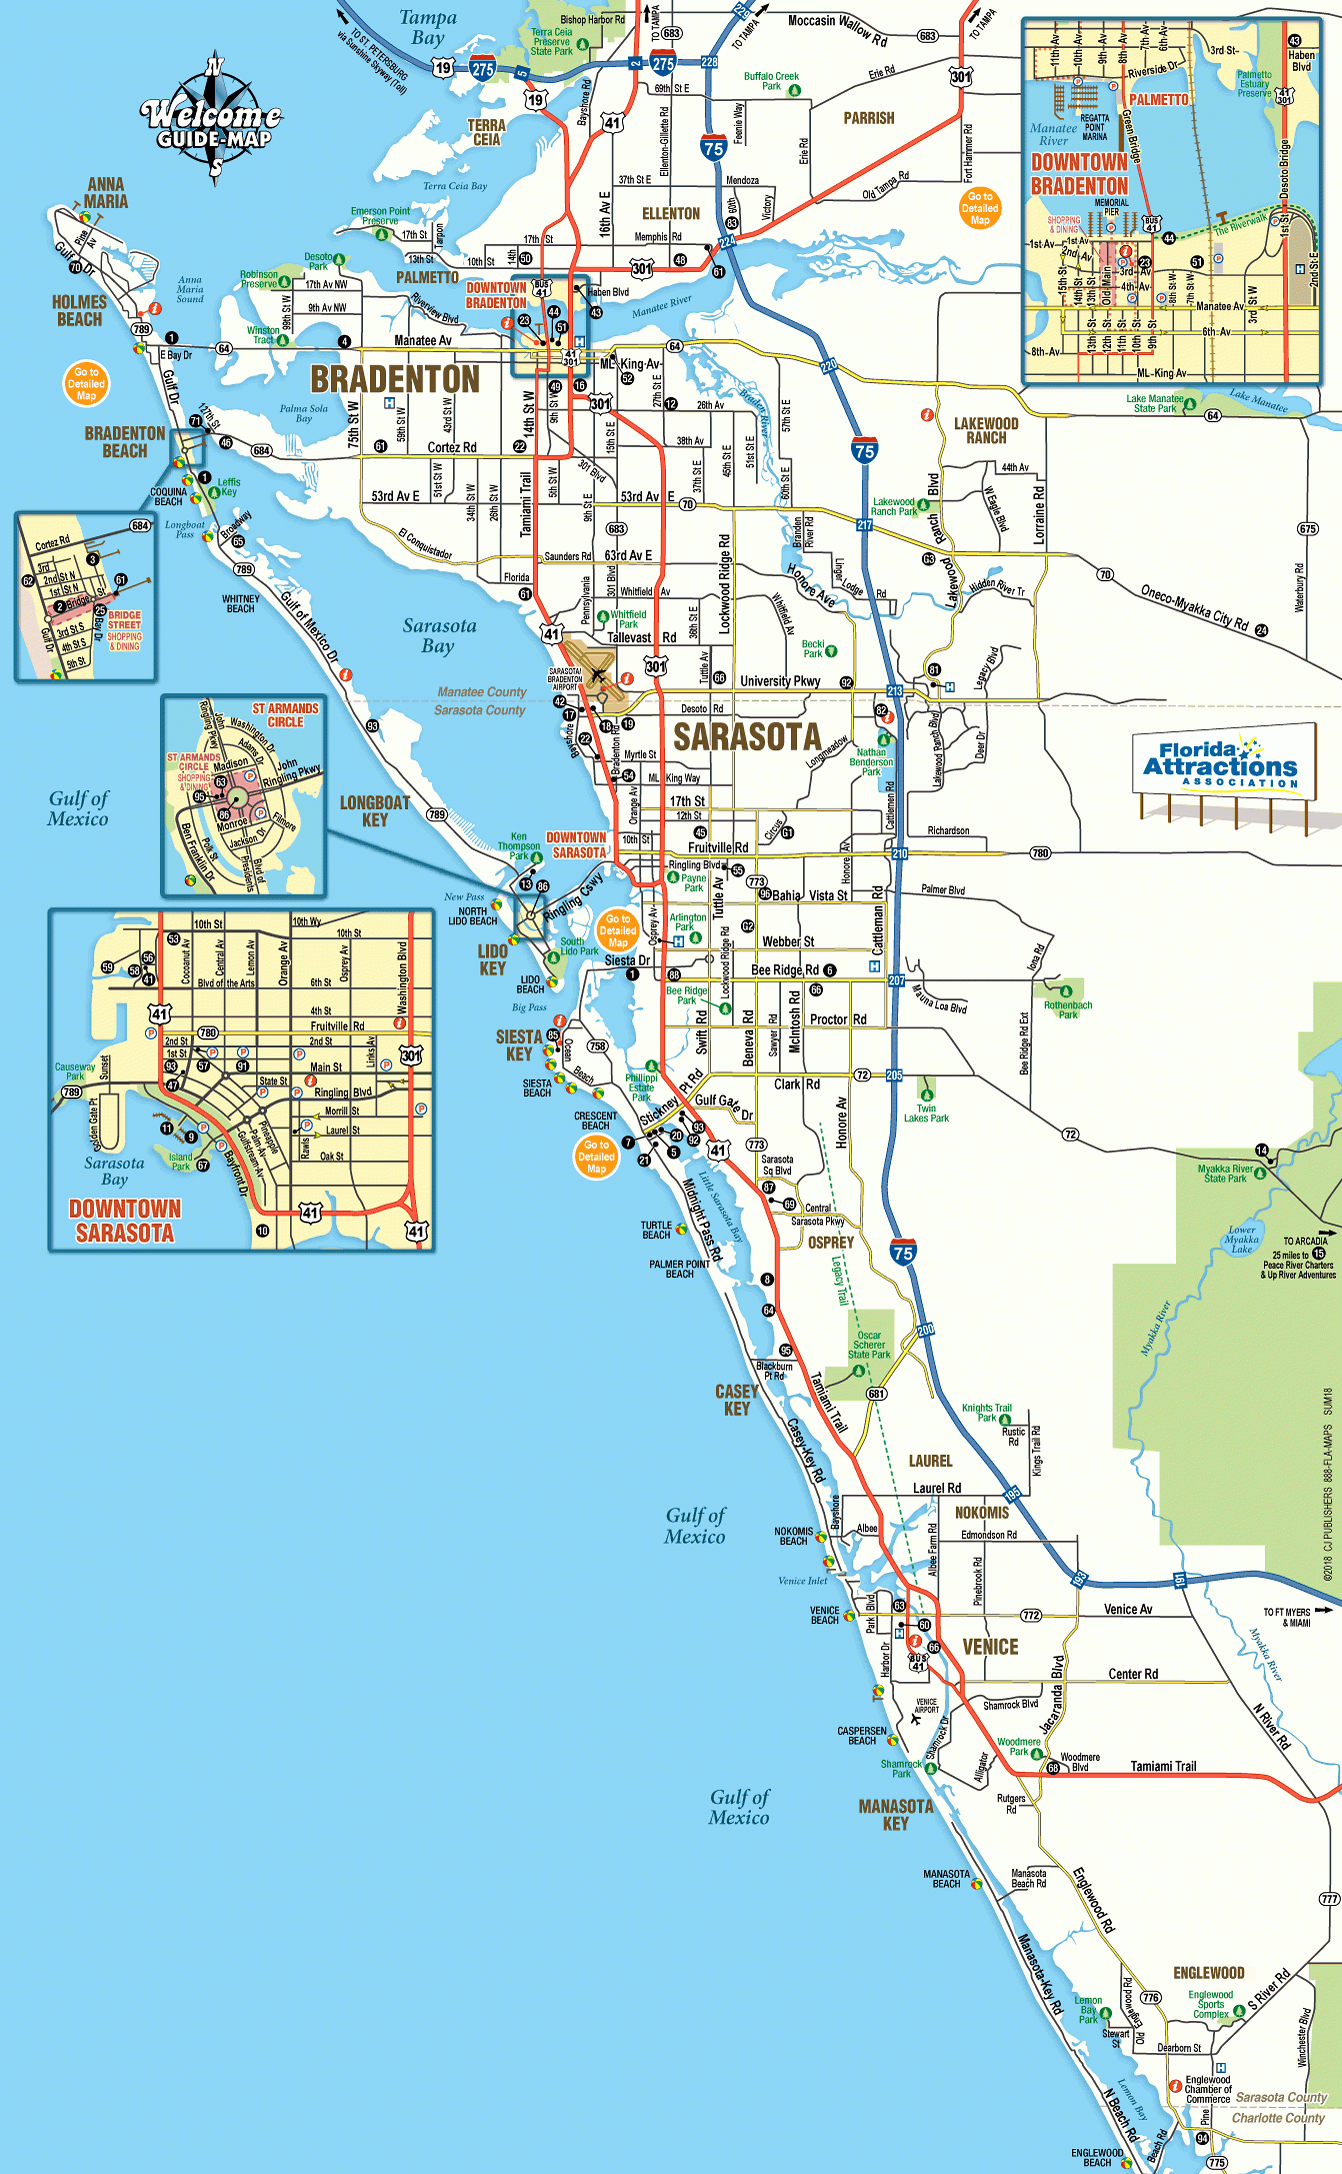 Sarasota Map - Falsomesias - Where Is Sarasota Florida On The Map